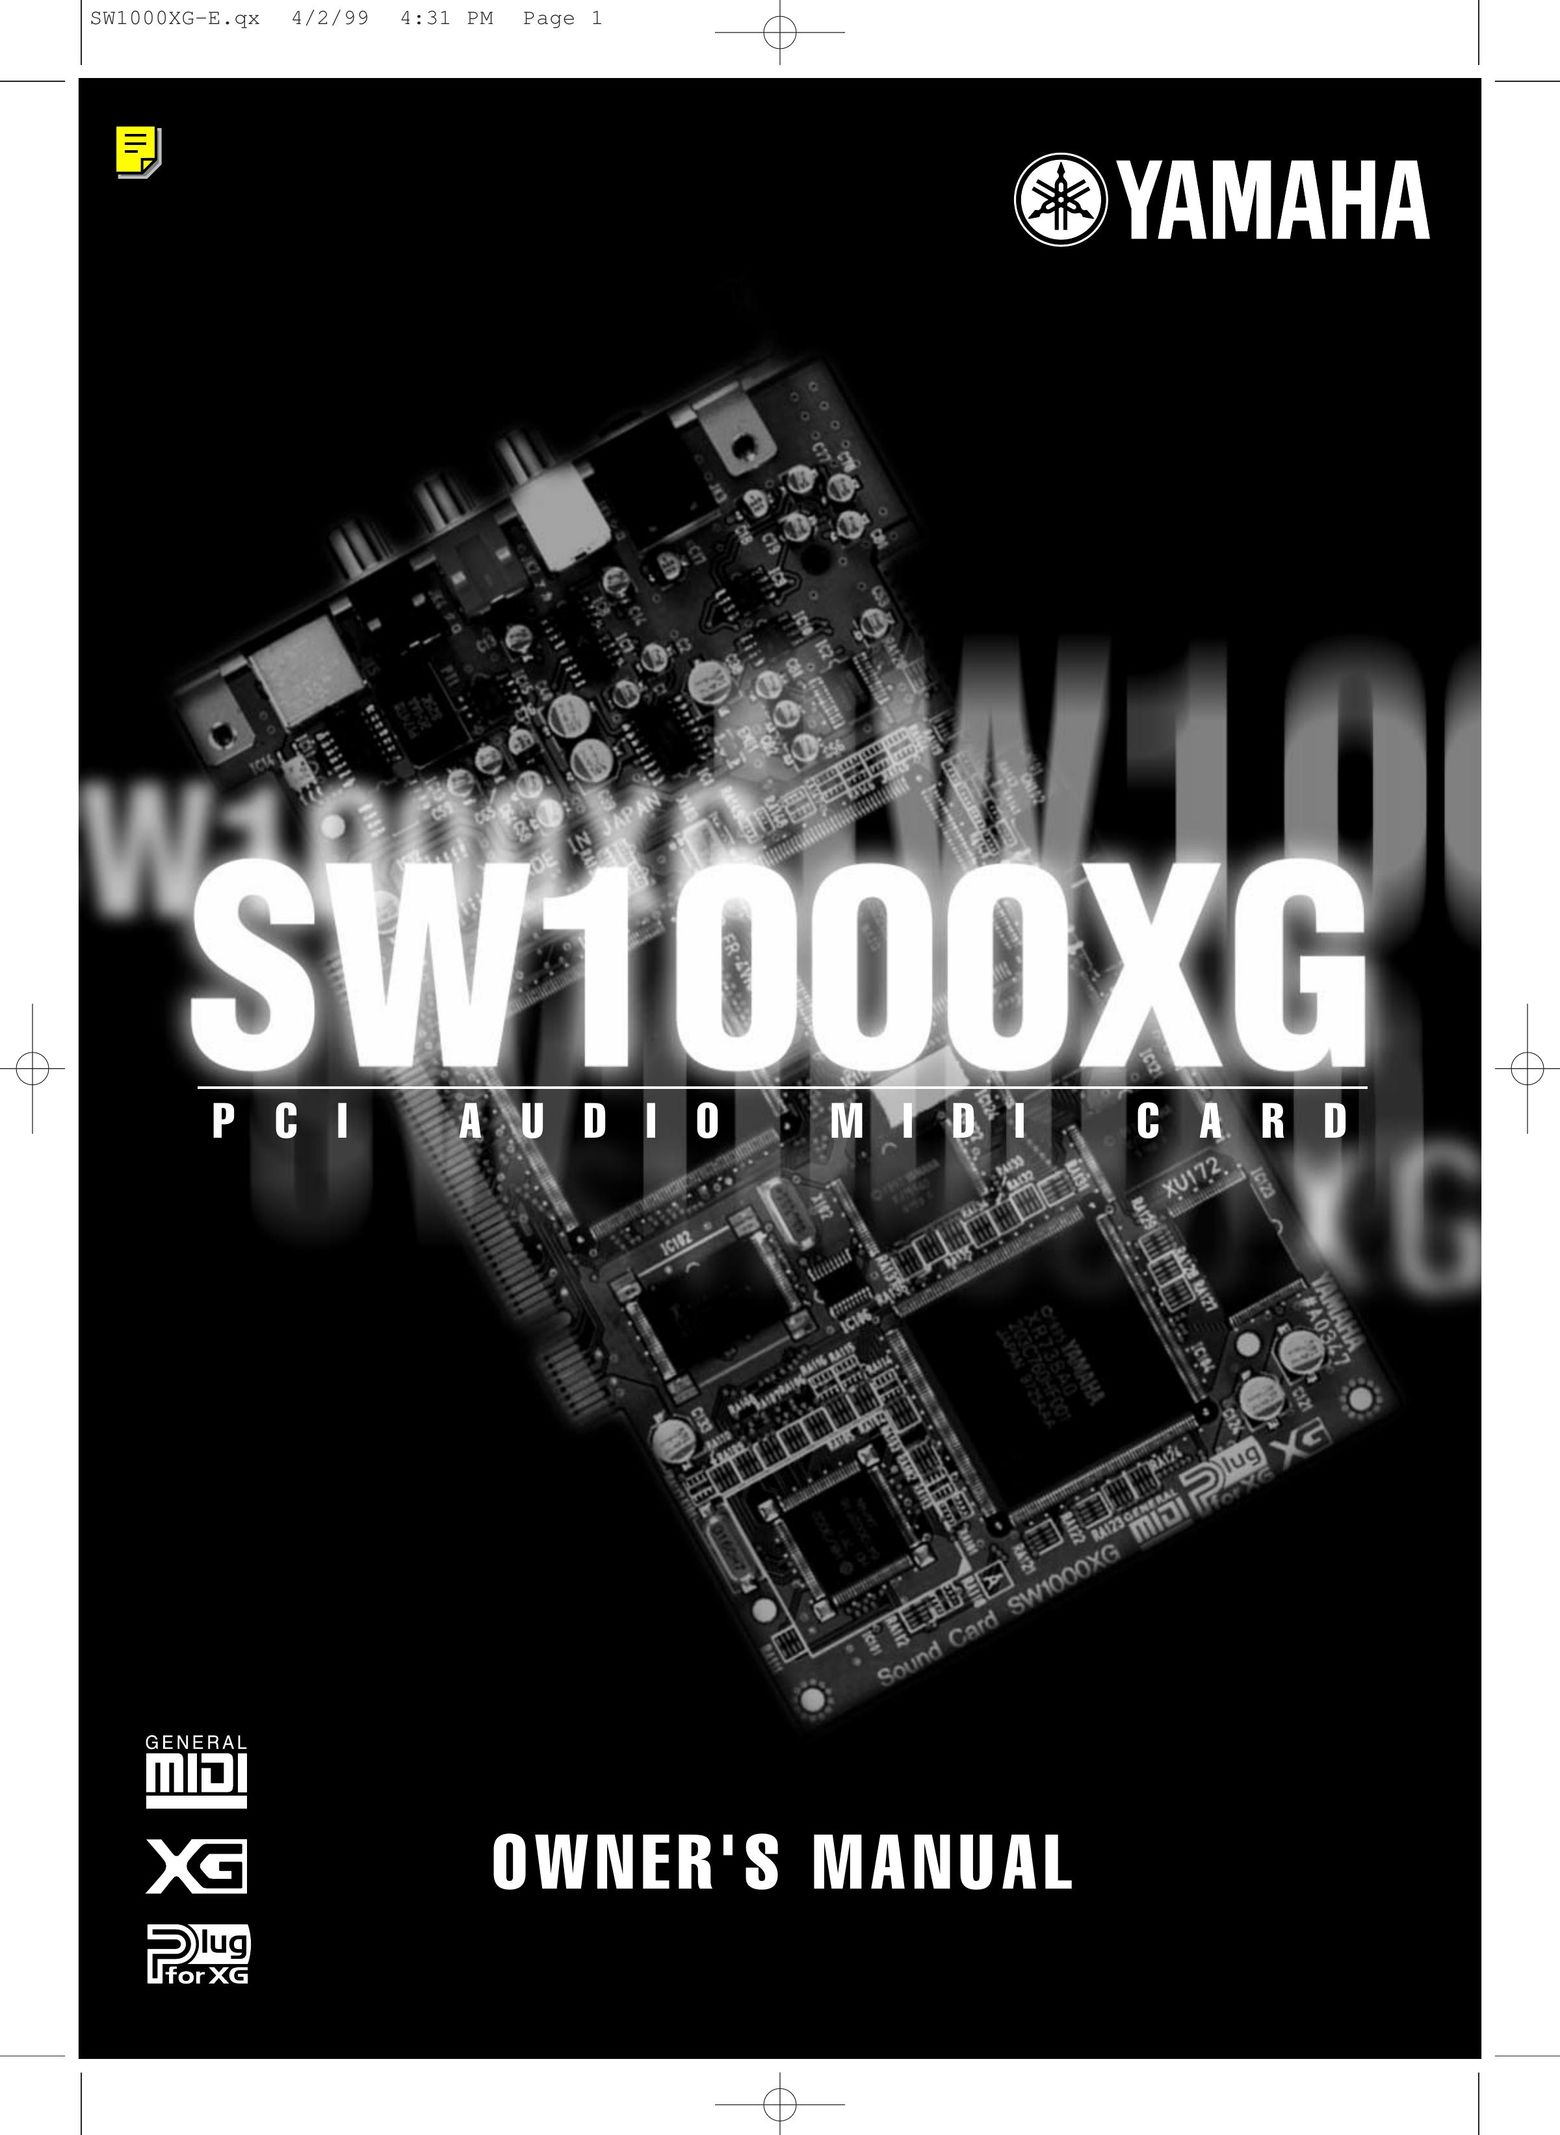 Yamaha SW1000XG-E Computer Hardware User Manual